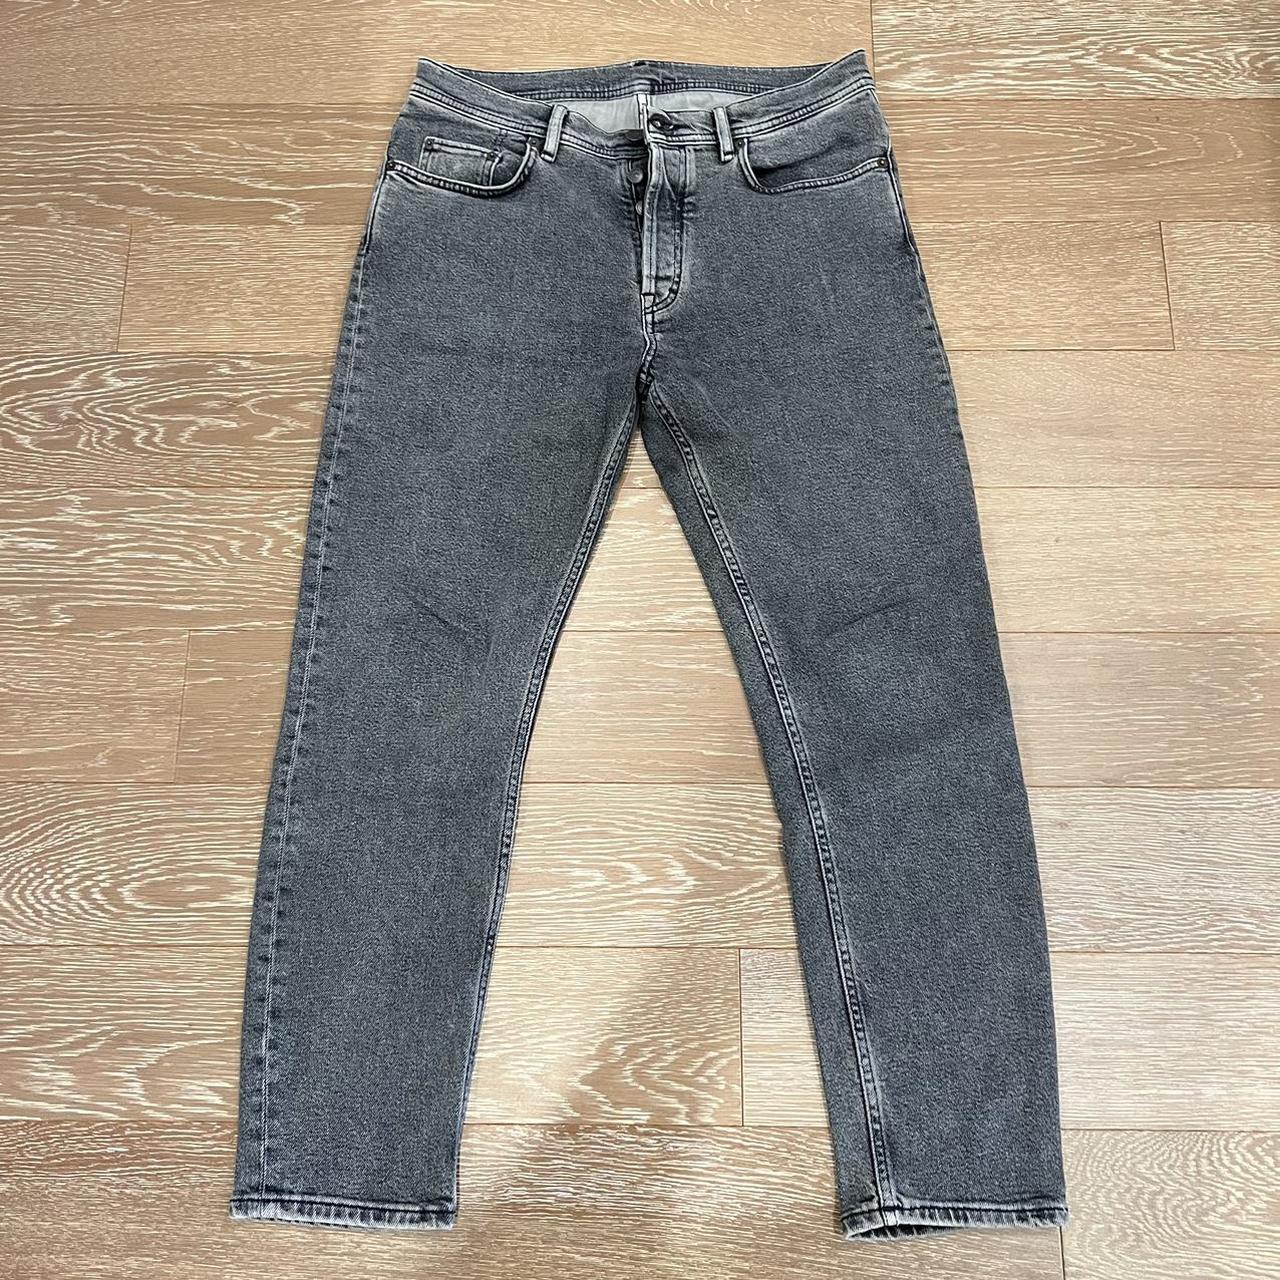 Acne Studios Slim Fit Jeans - Grey 32